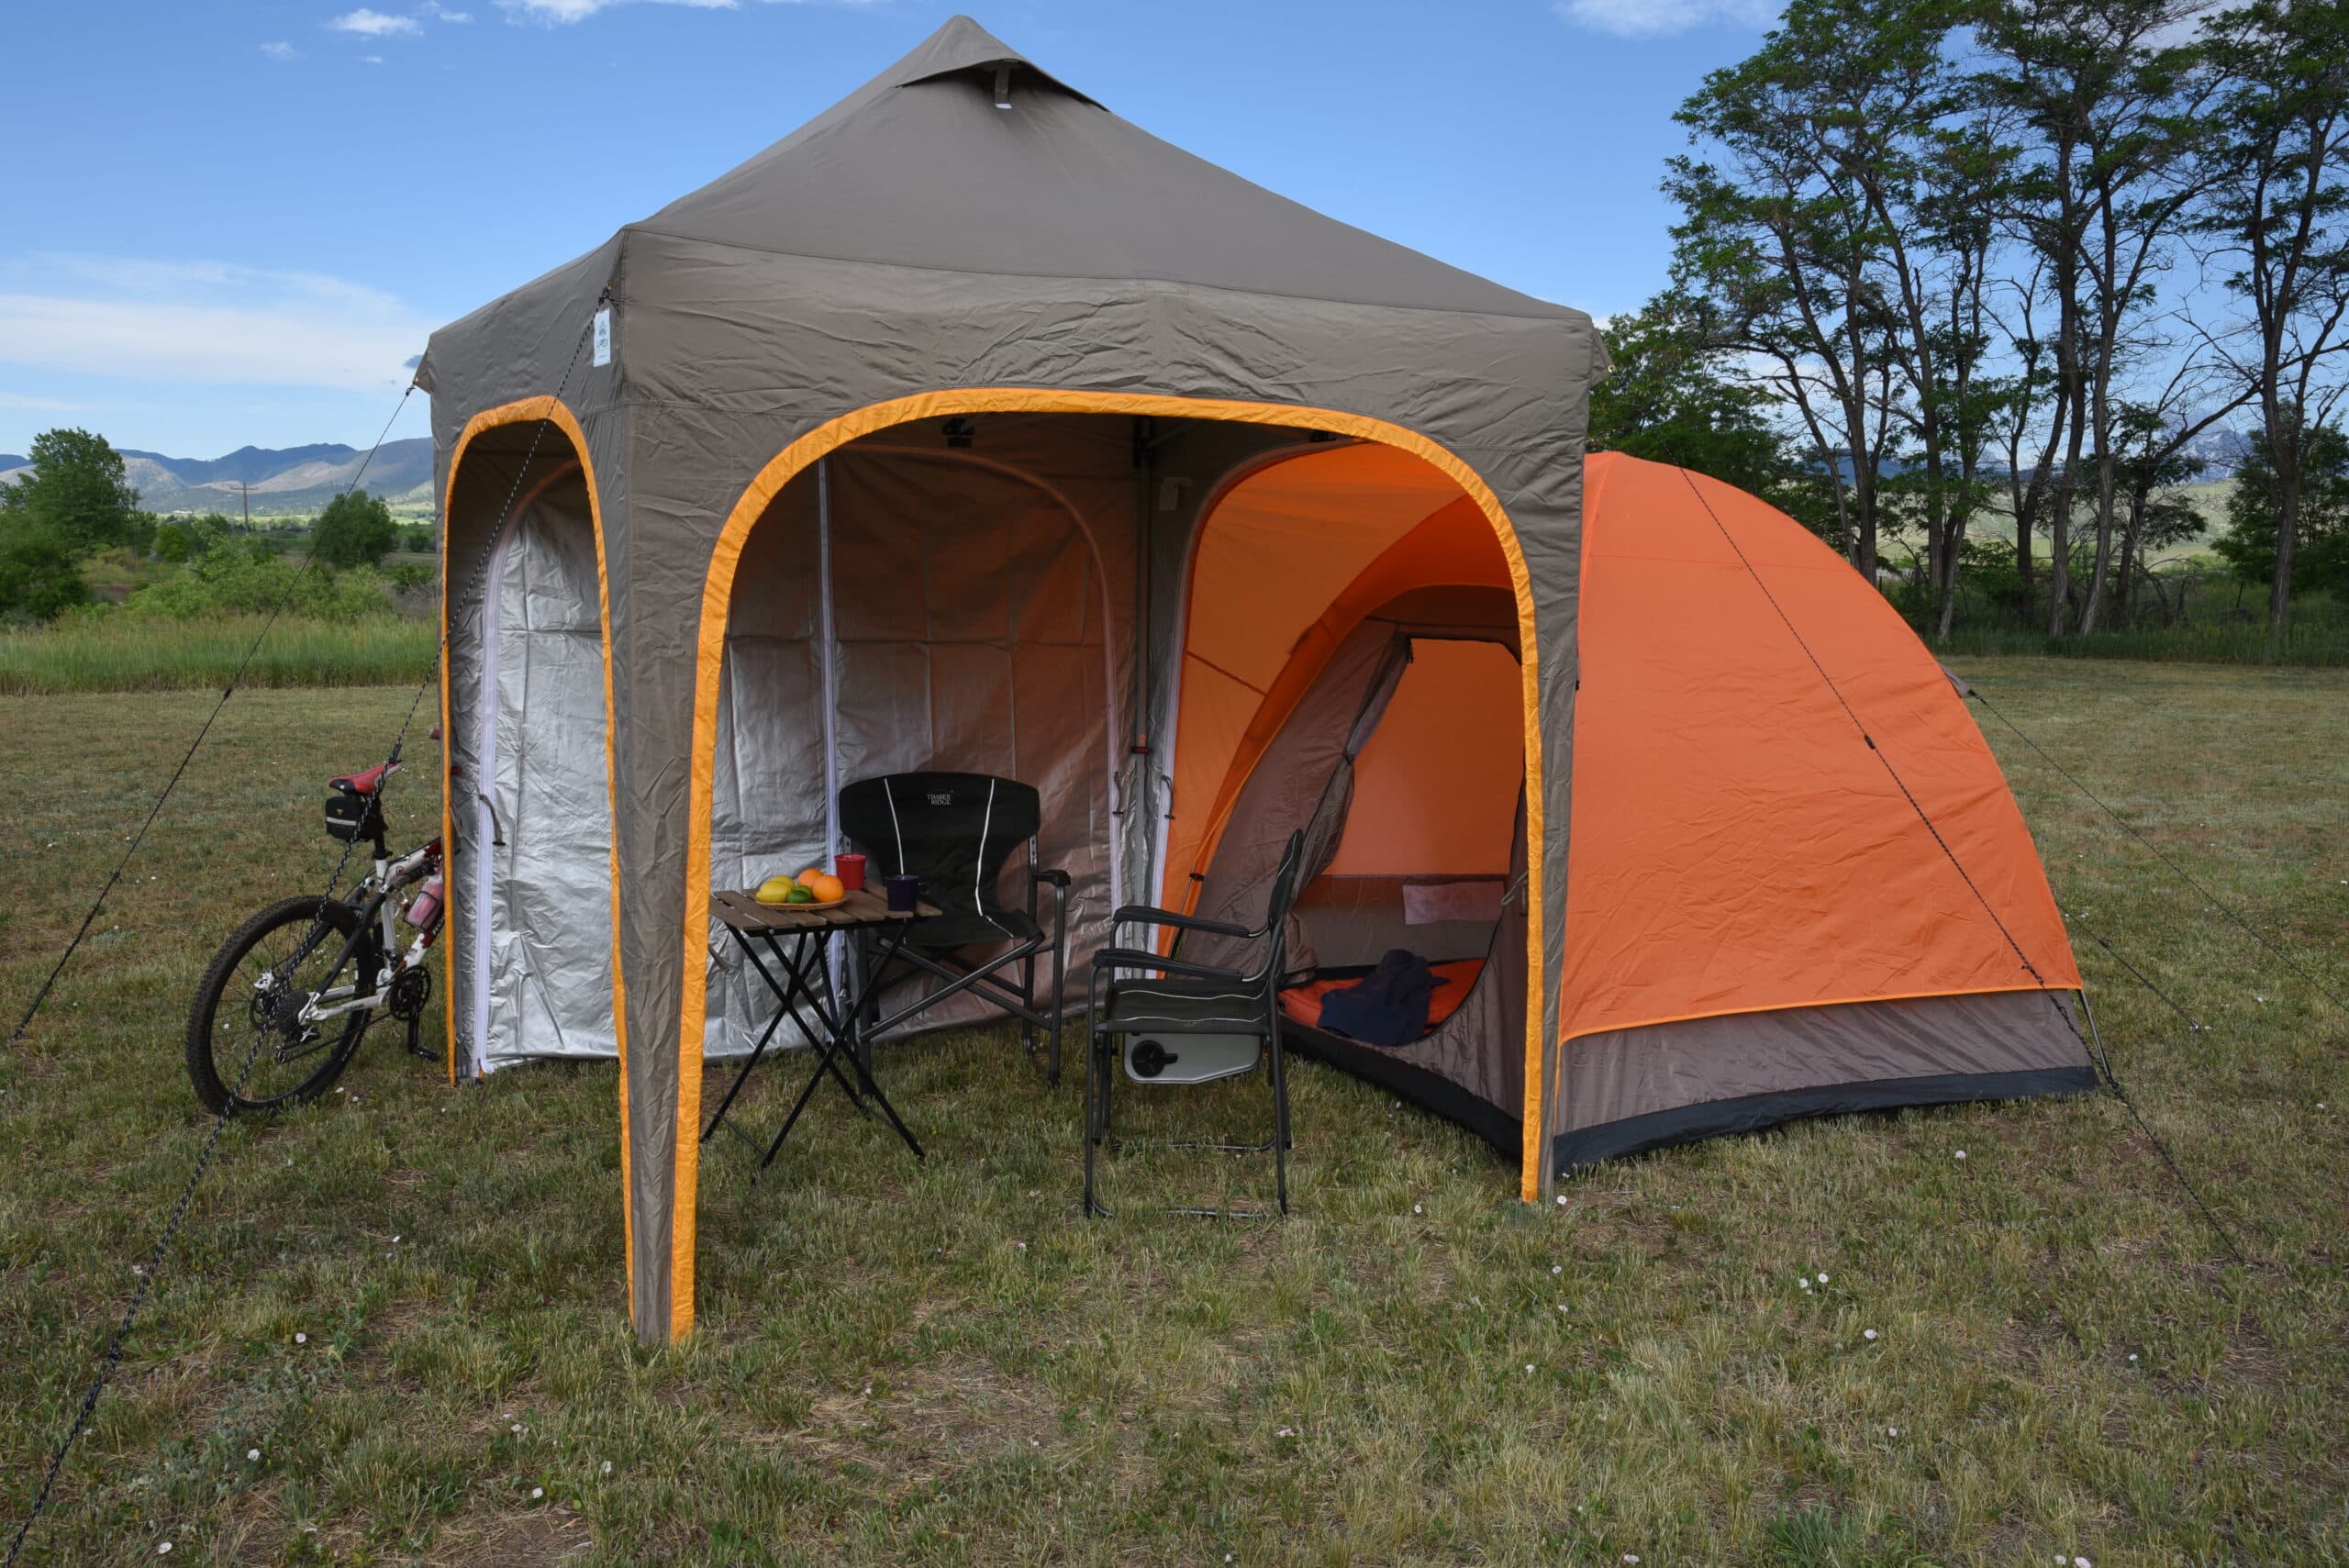 Apex Camp Canopy Dome Tent Modular